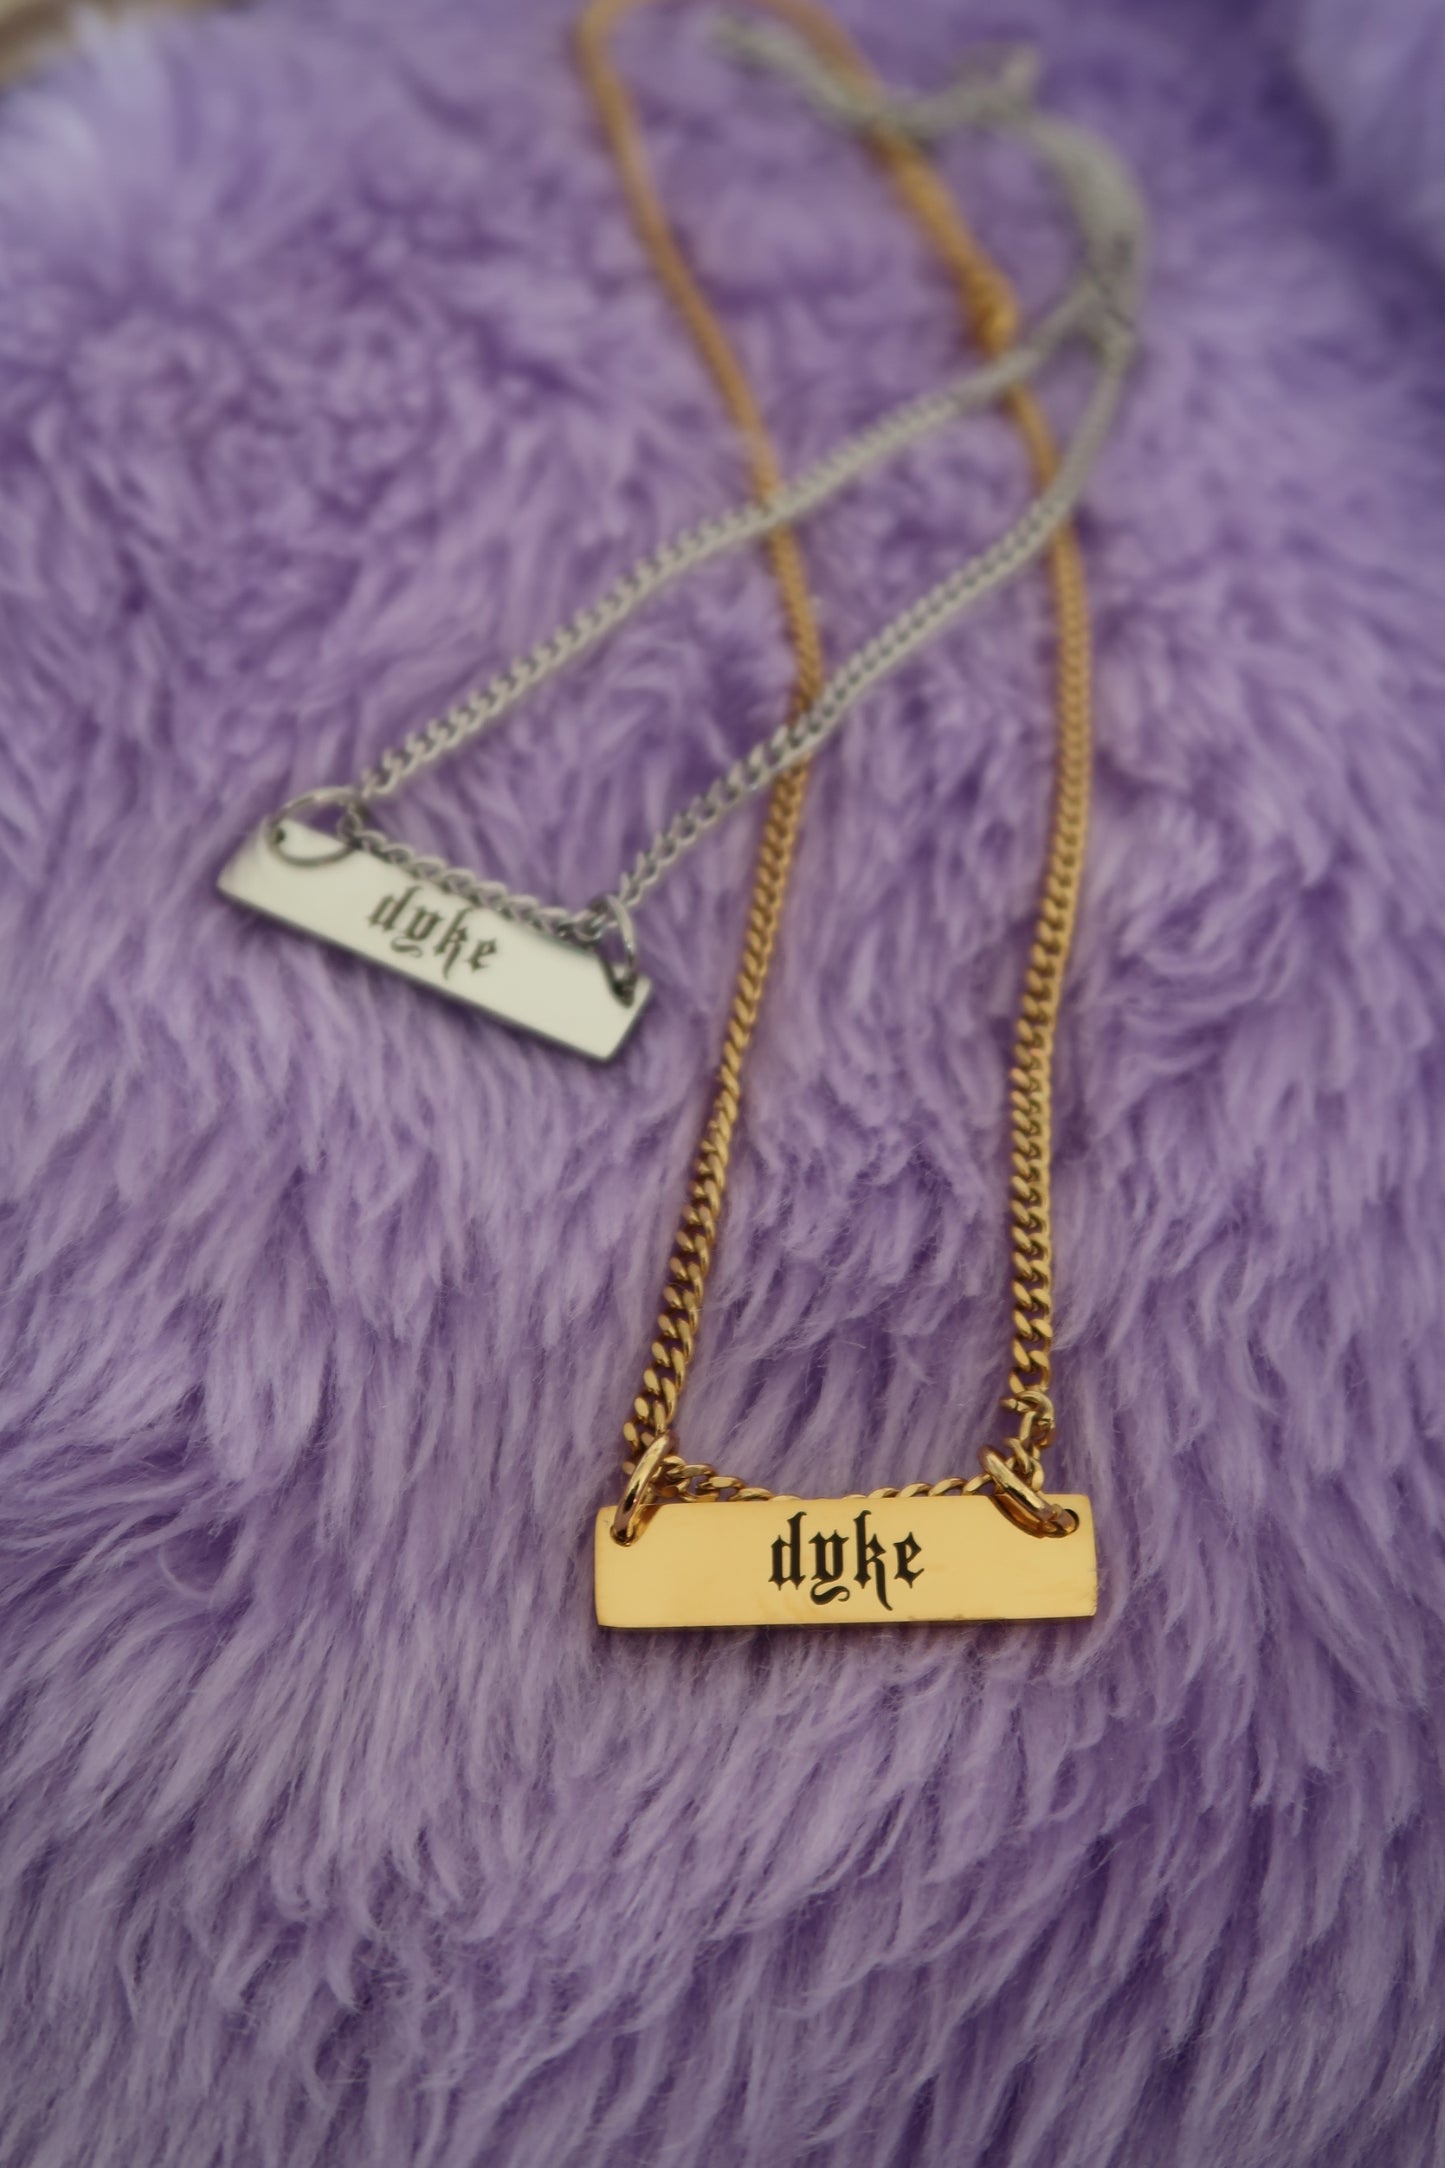 dyke necklace